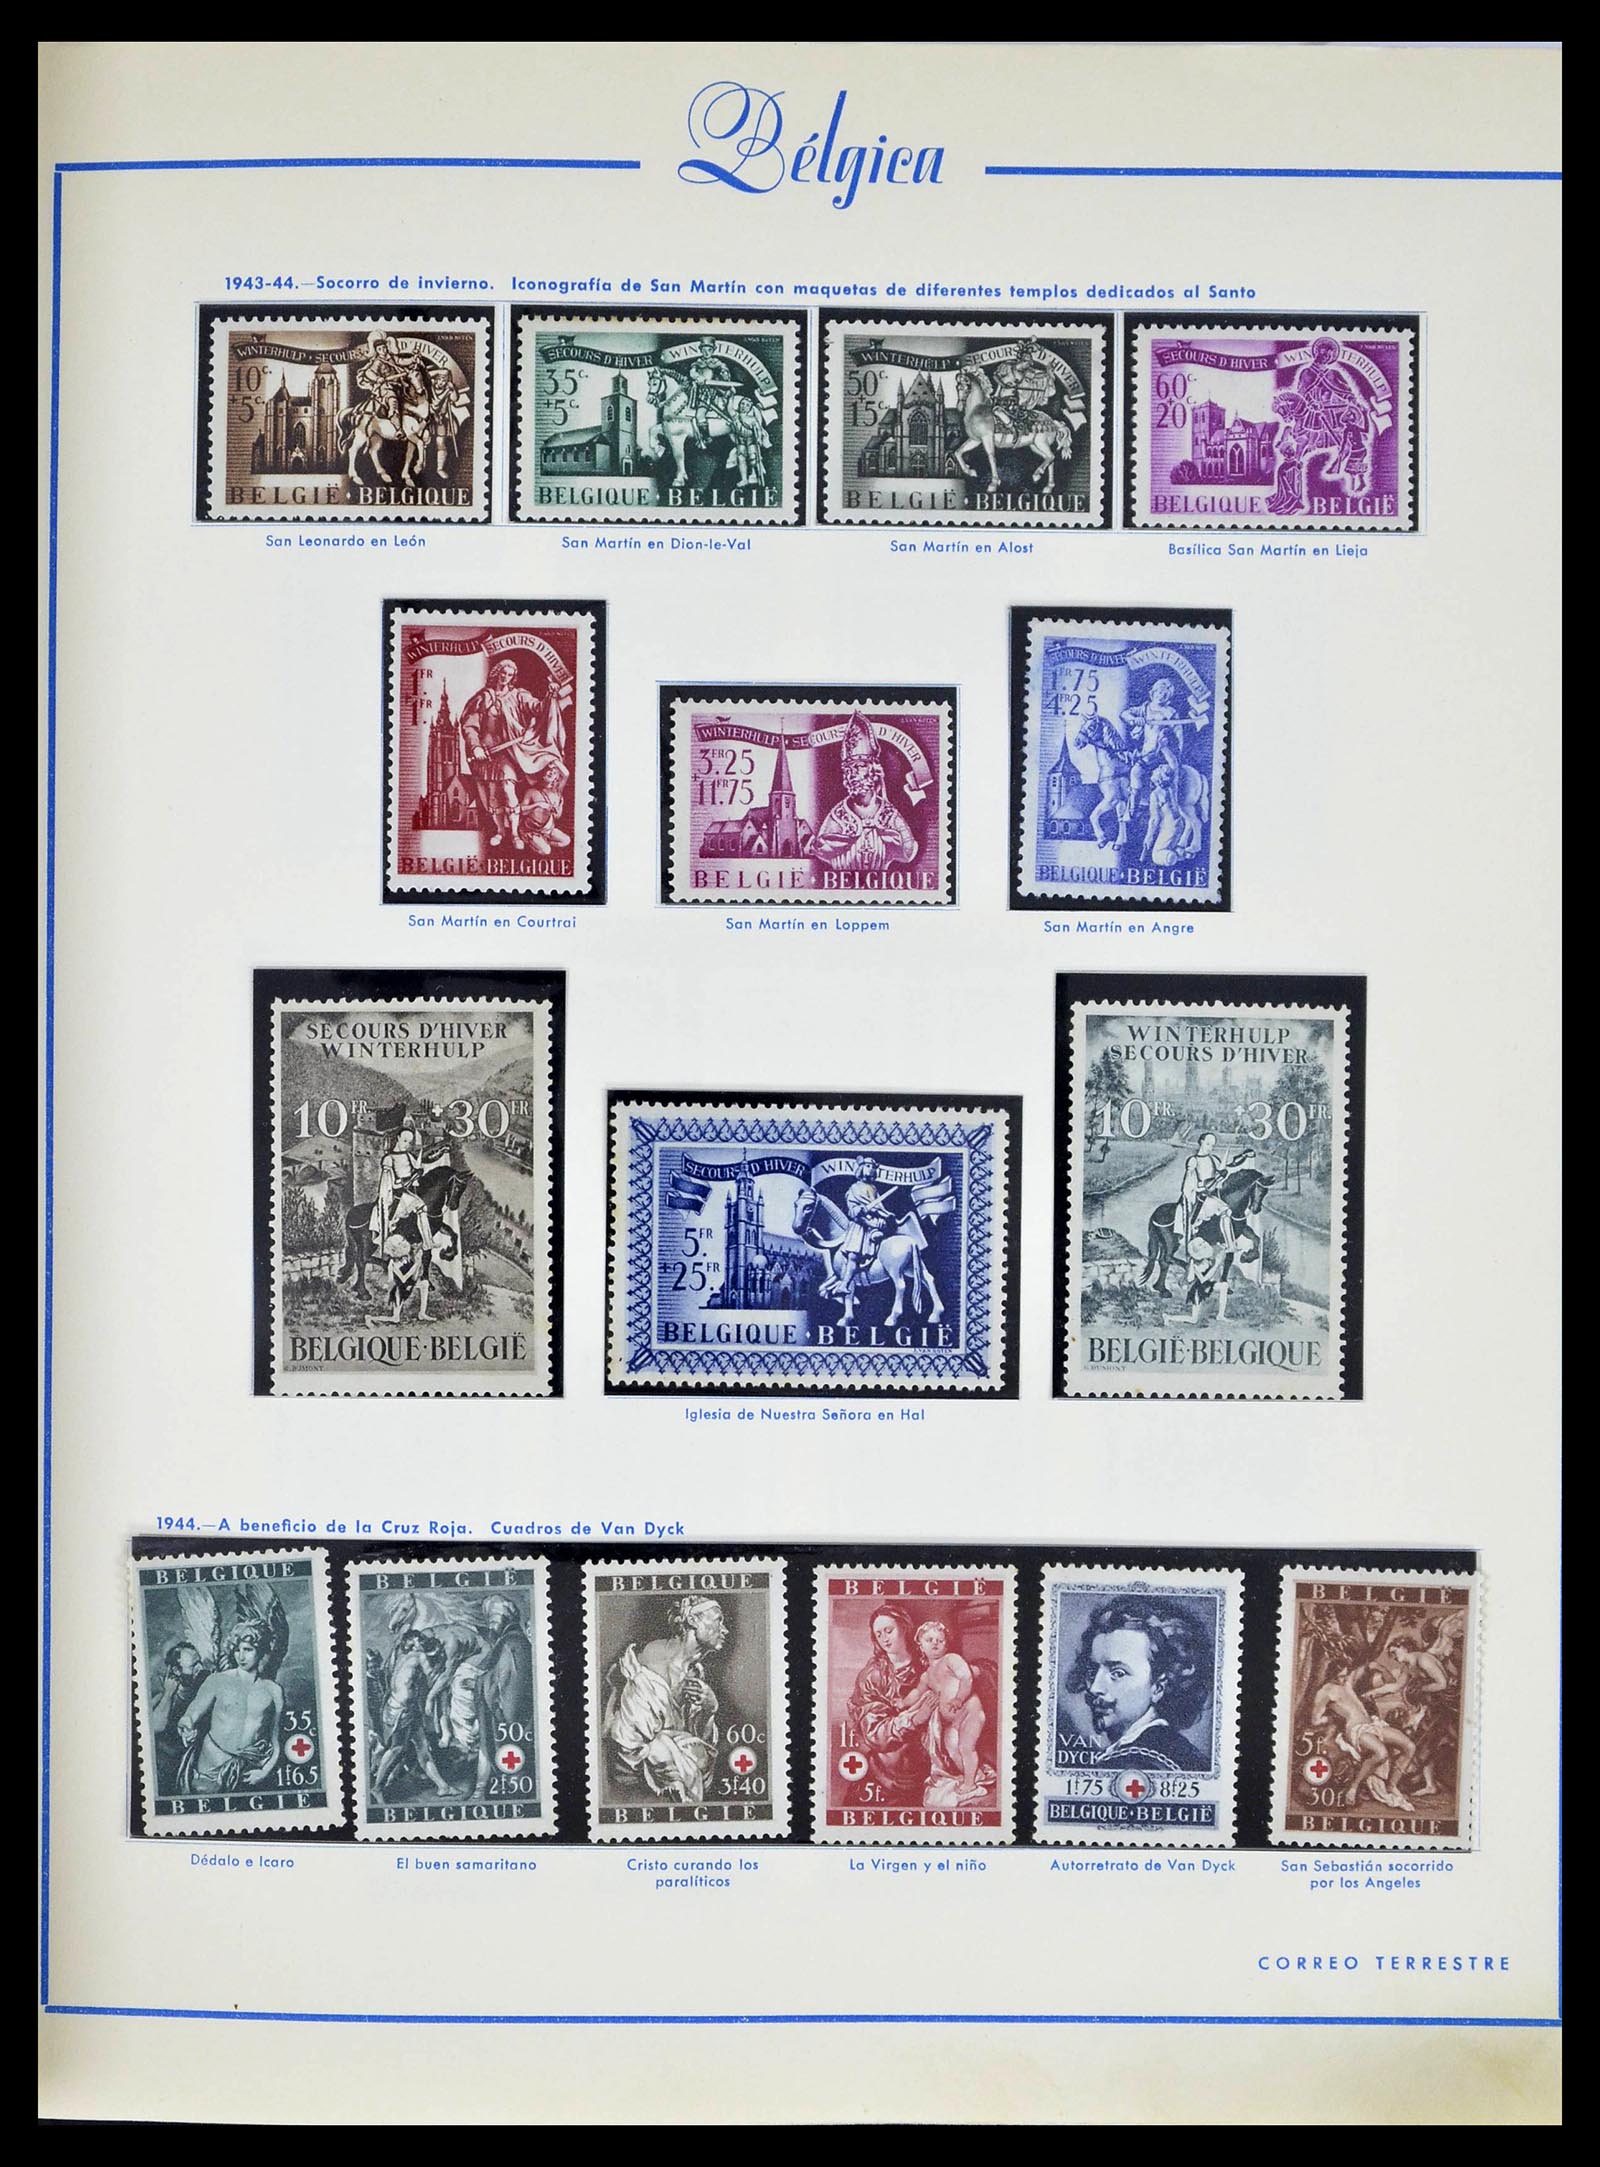 39230 0043 - Stamp collection 39230 Belgium 1849-1976.